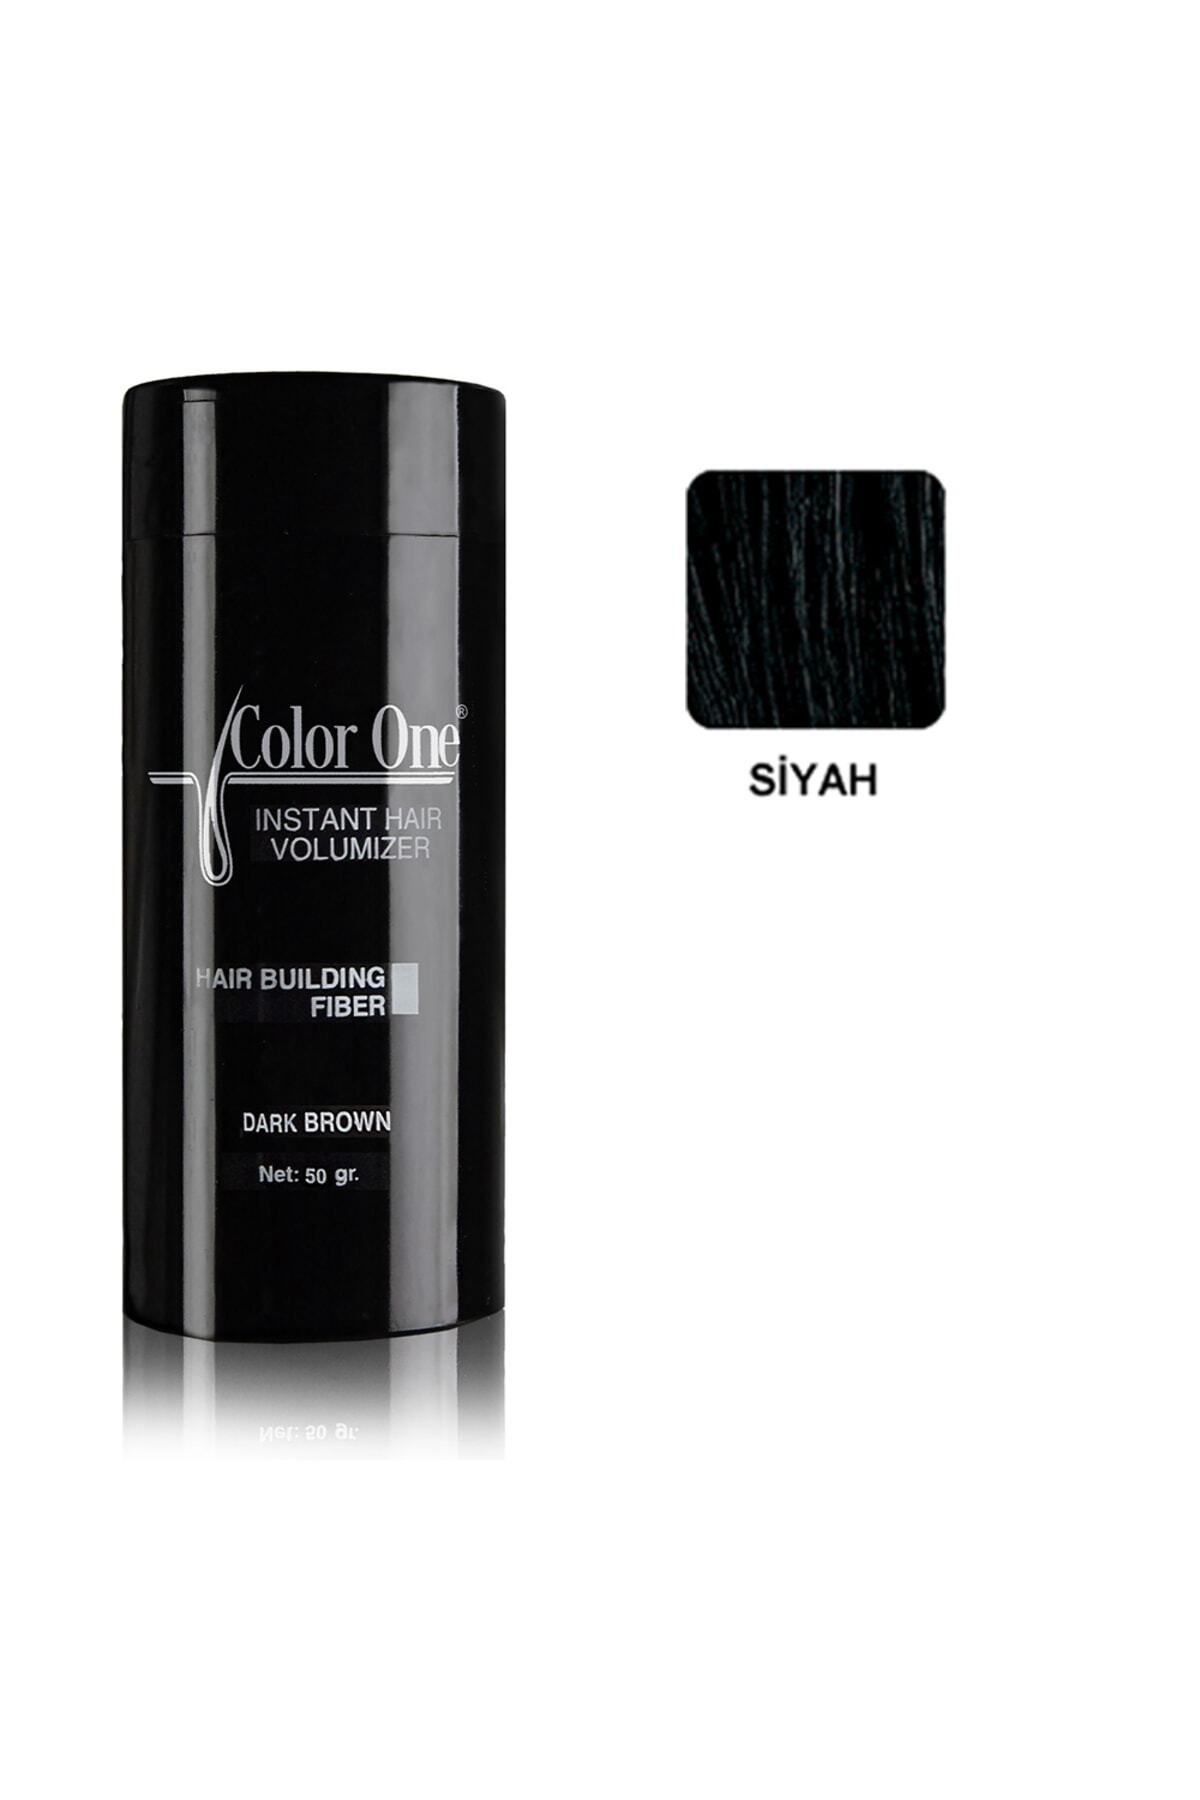 Color One Hair Powder Siyah Saç Tozu Topik 50 gr Organik Boya Içermez Leke Yapmaz